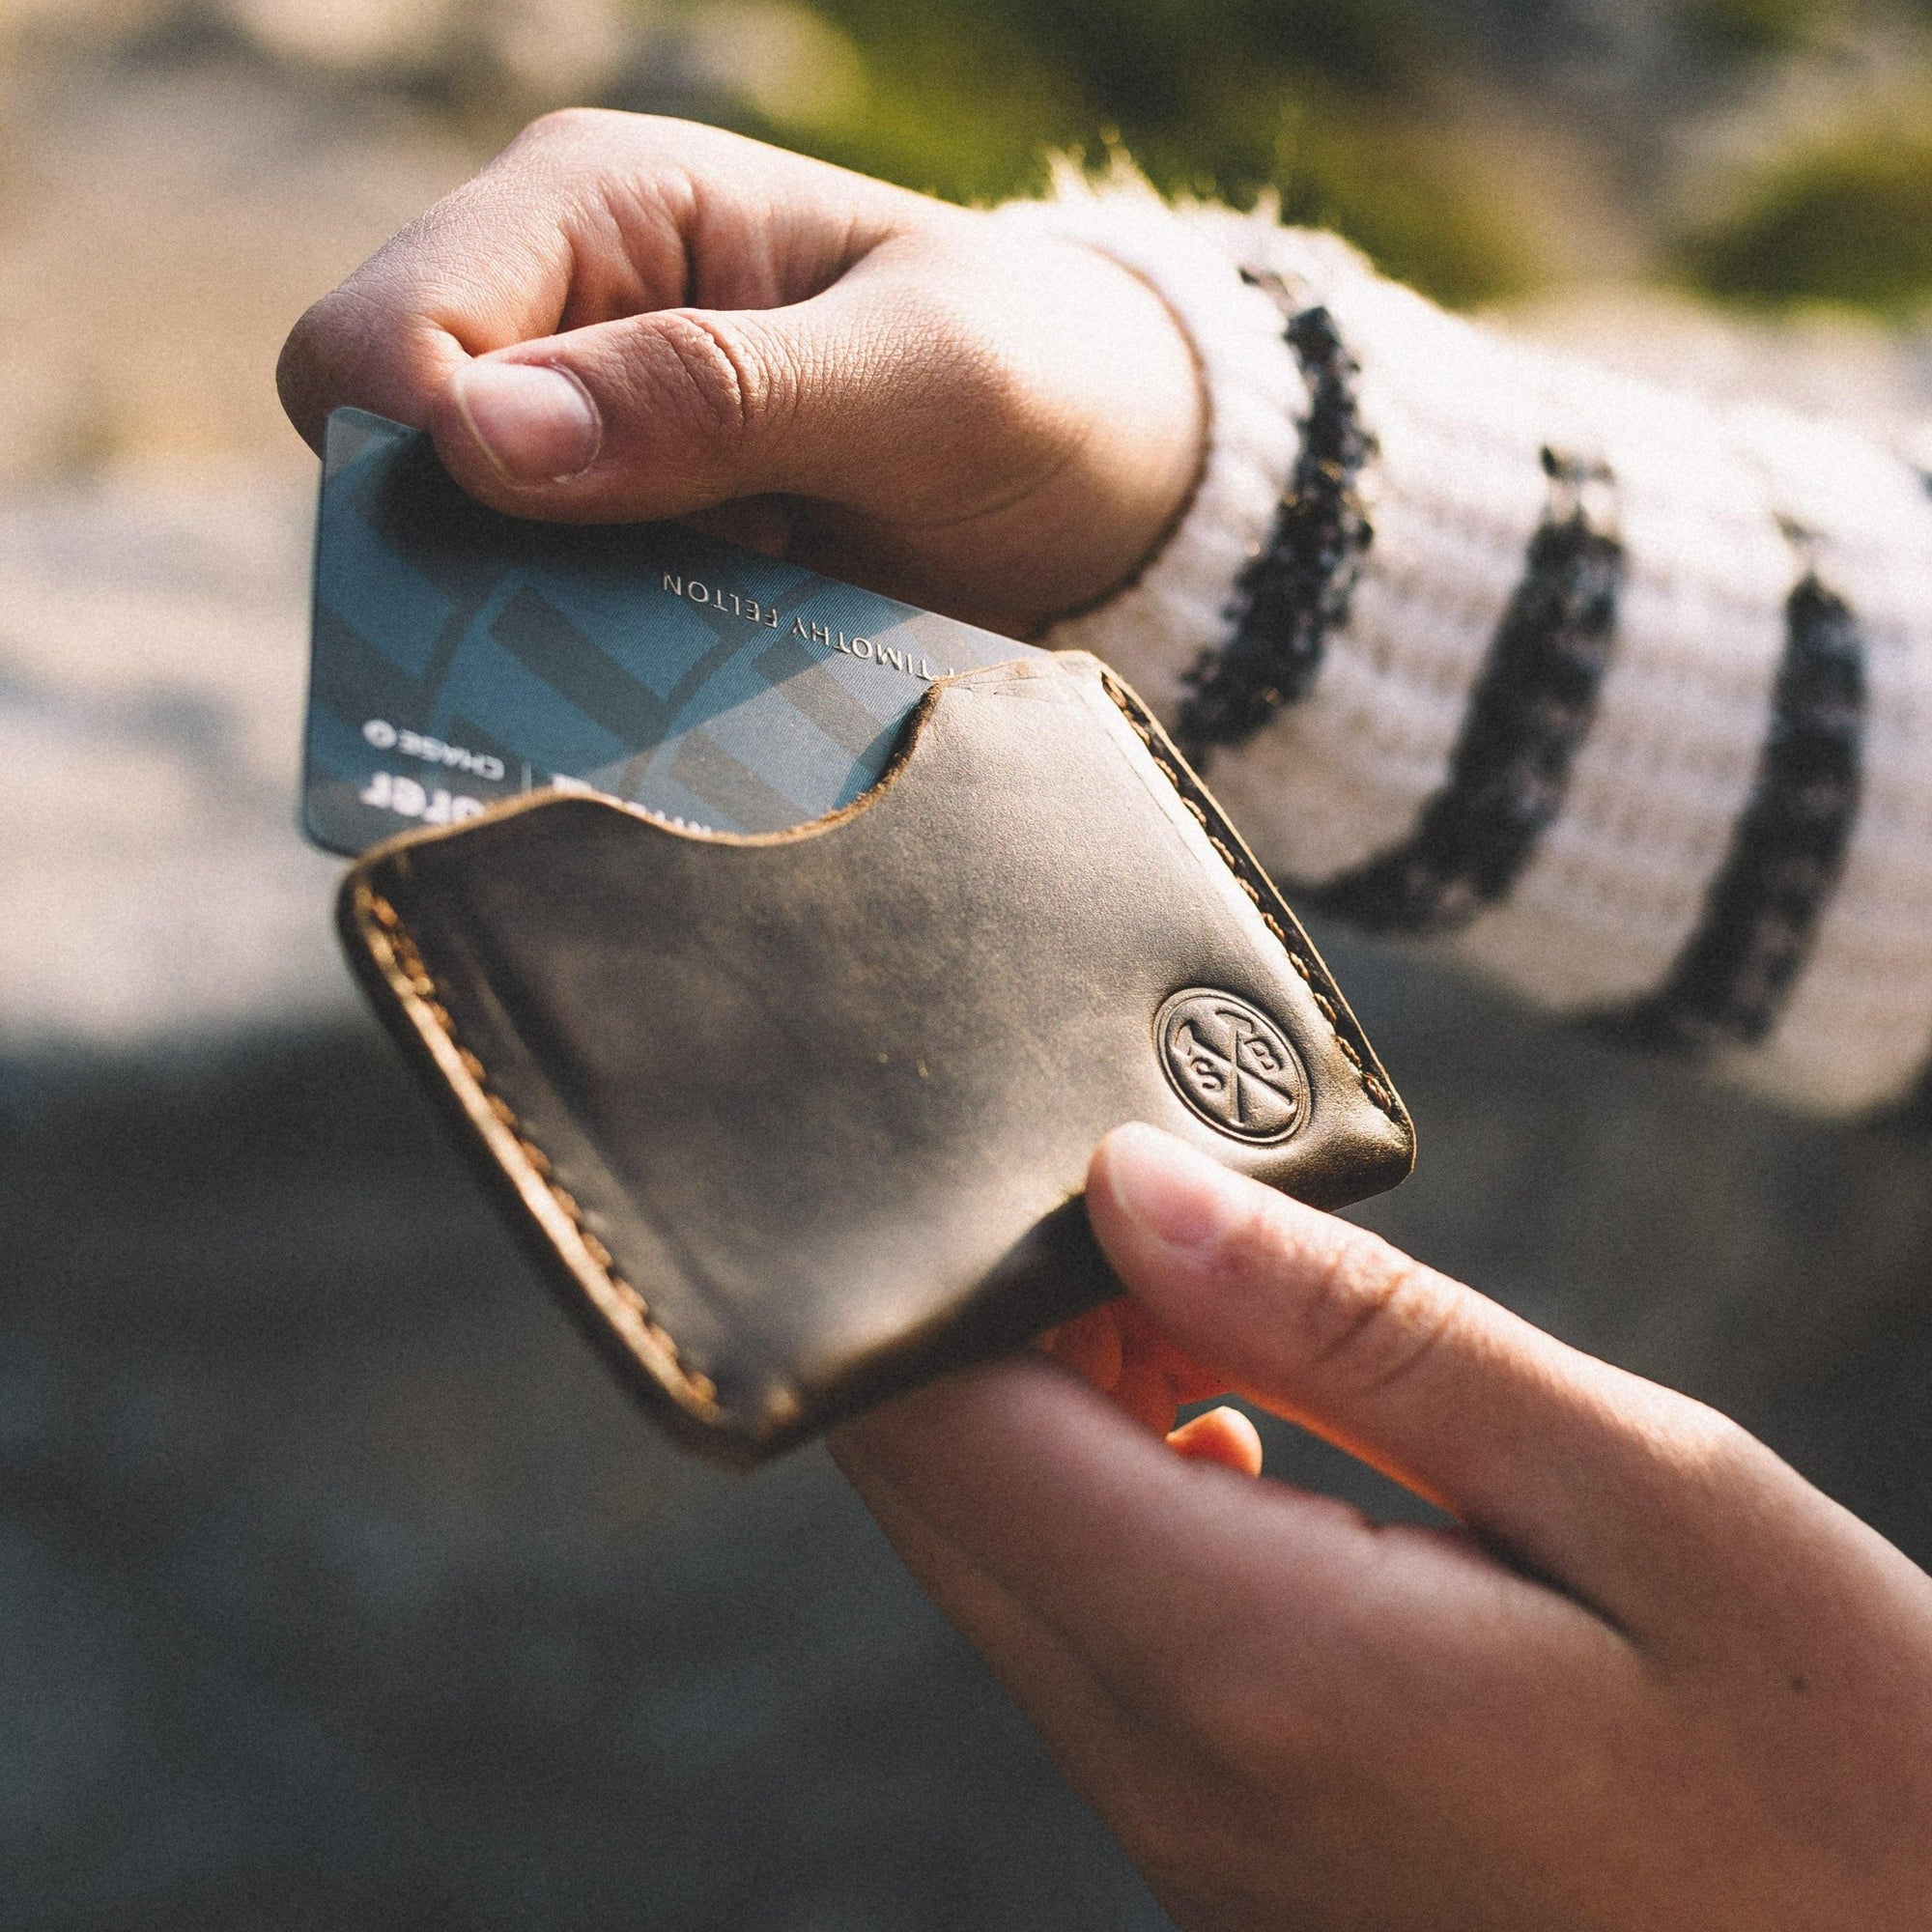 Popvcly Deals Men's Minimalist Genuine Leather Wallet